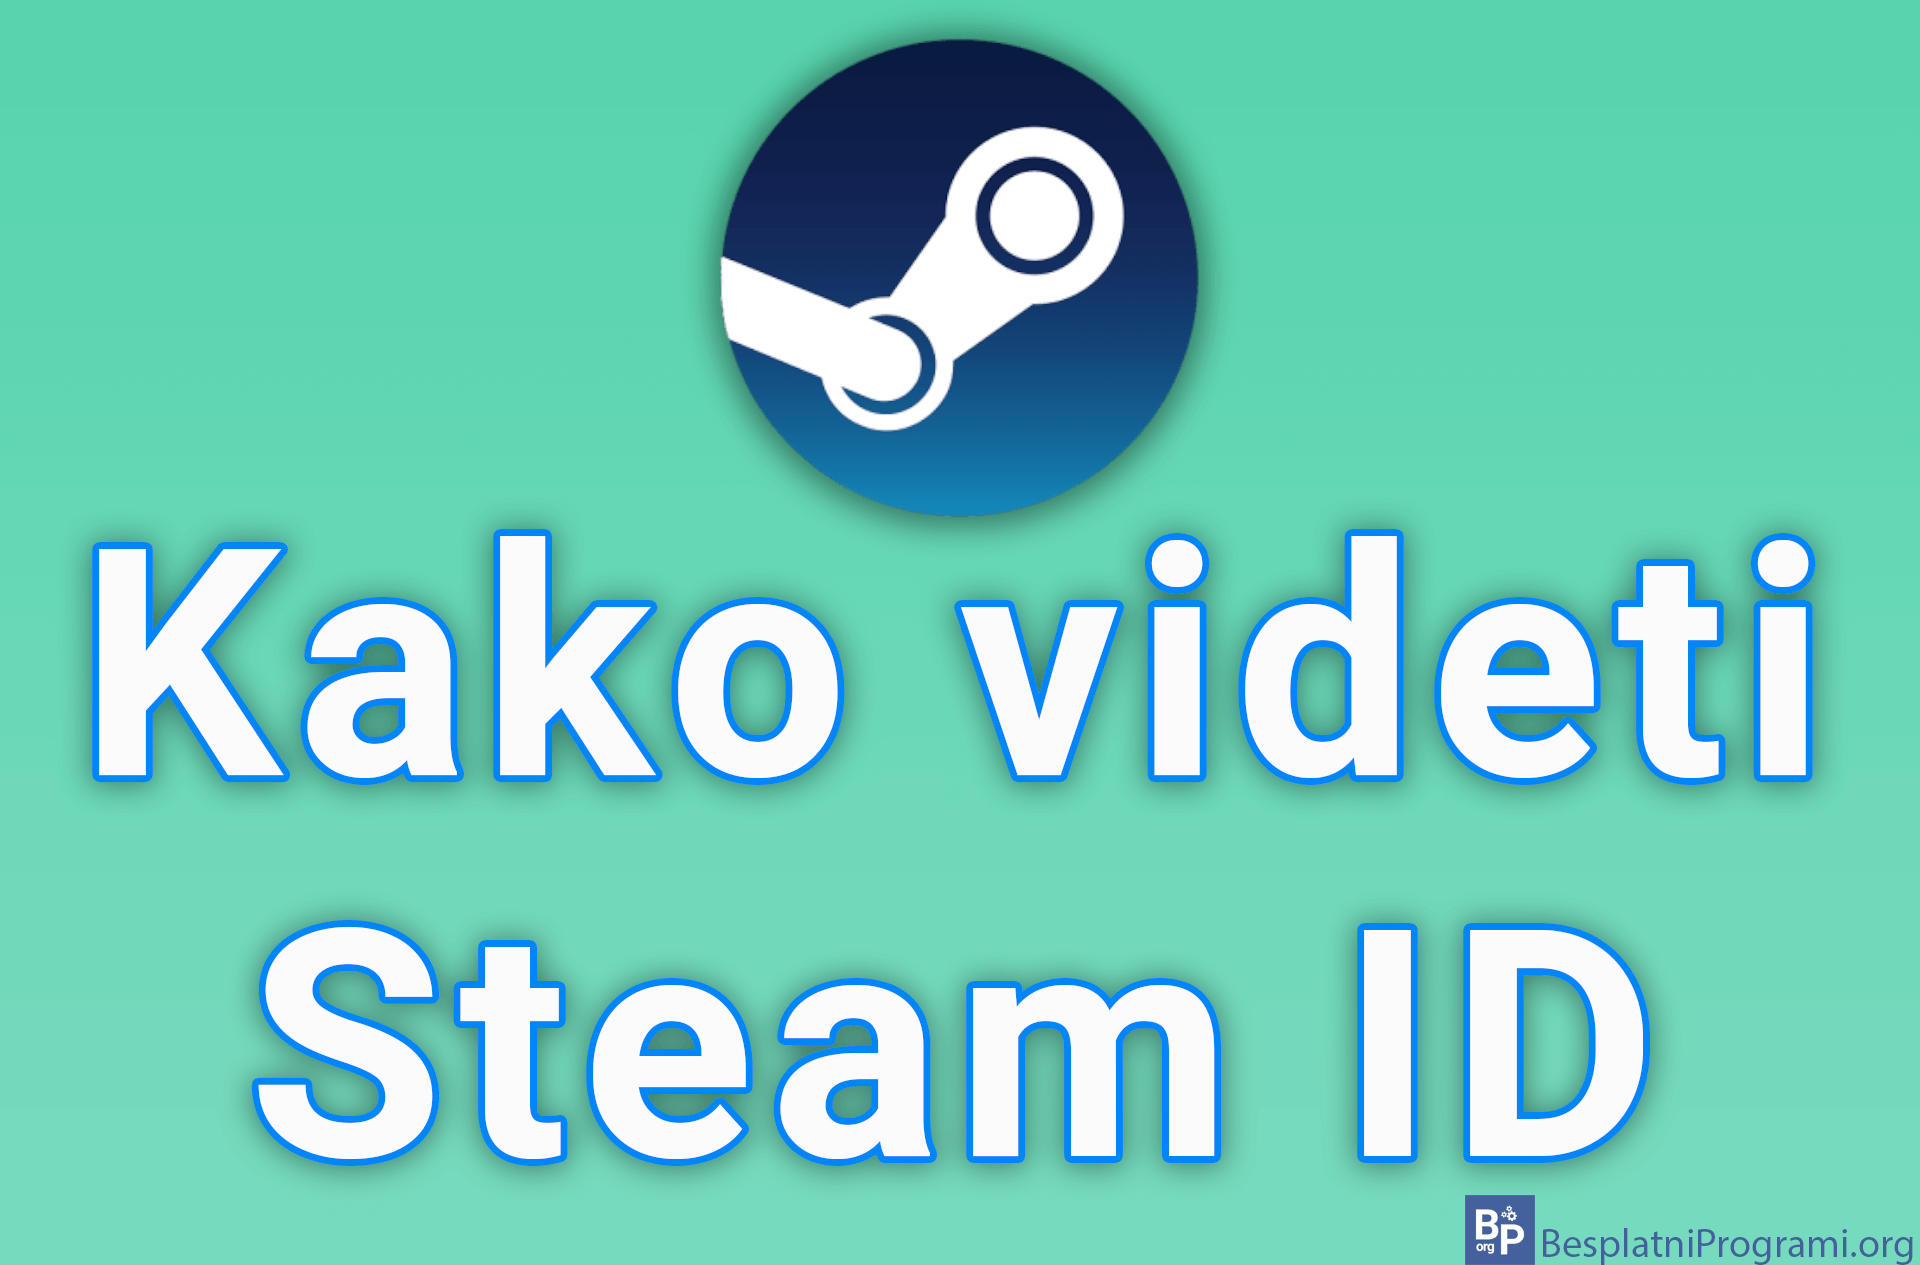 Kako videti Steam ID